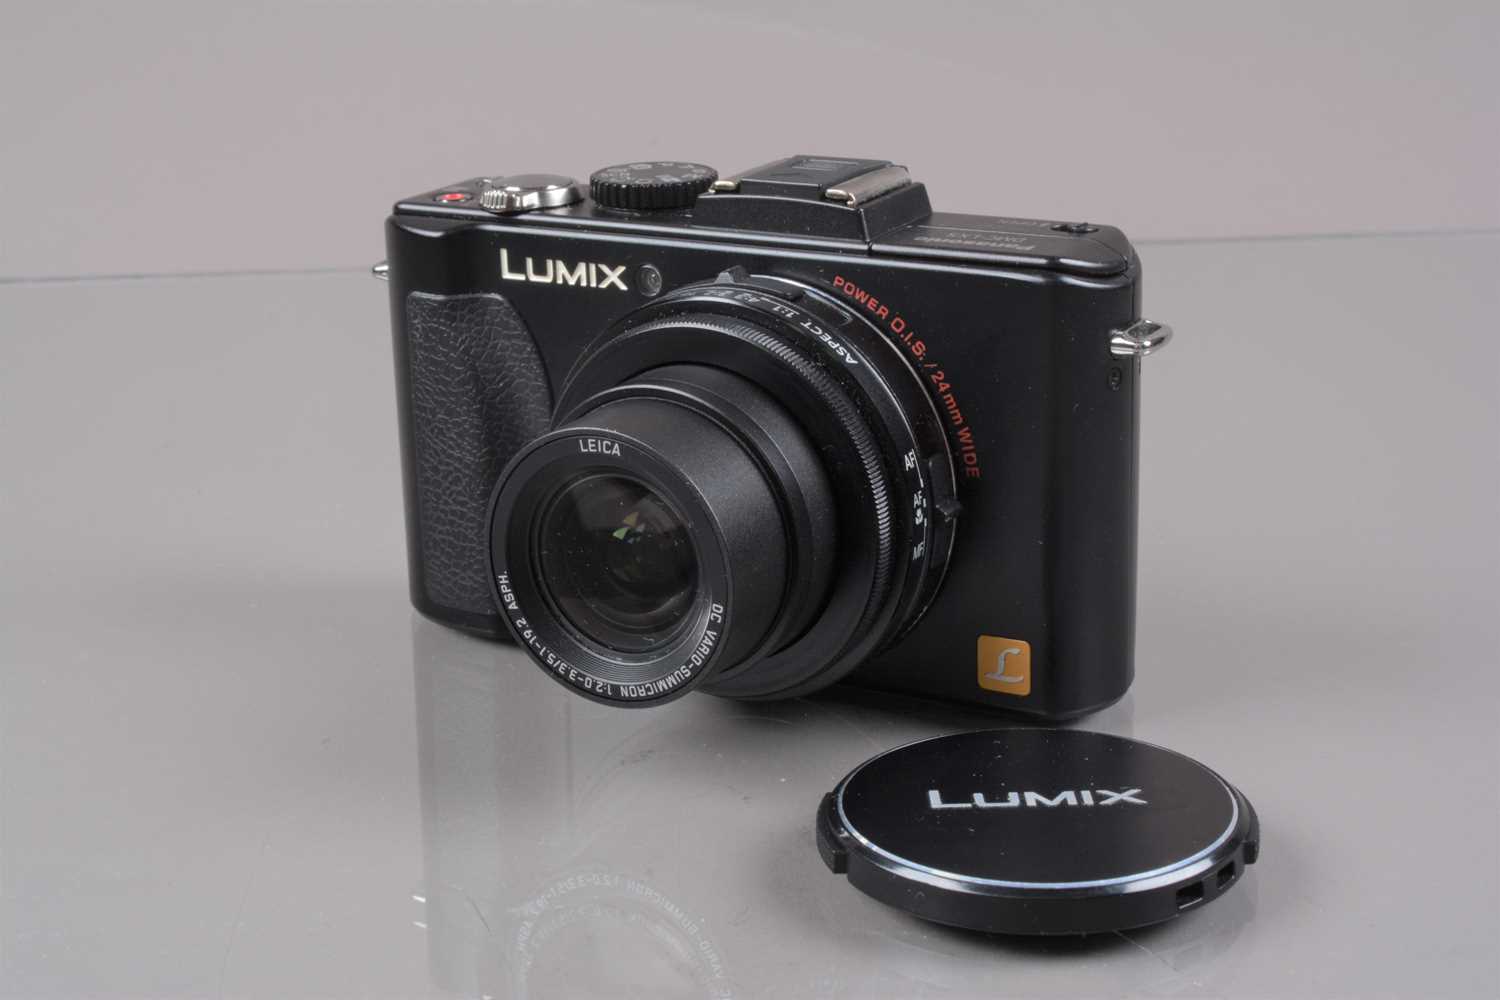 A Panasonic Lumix LX5 Digital Camera,